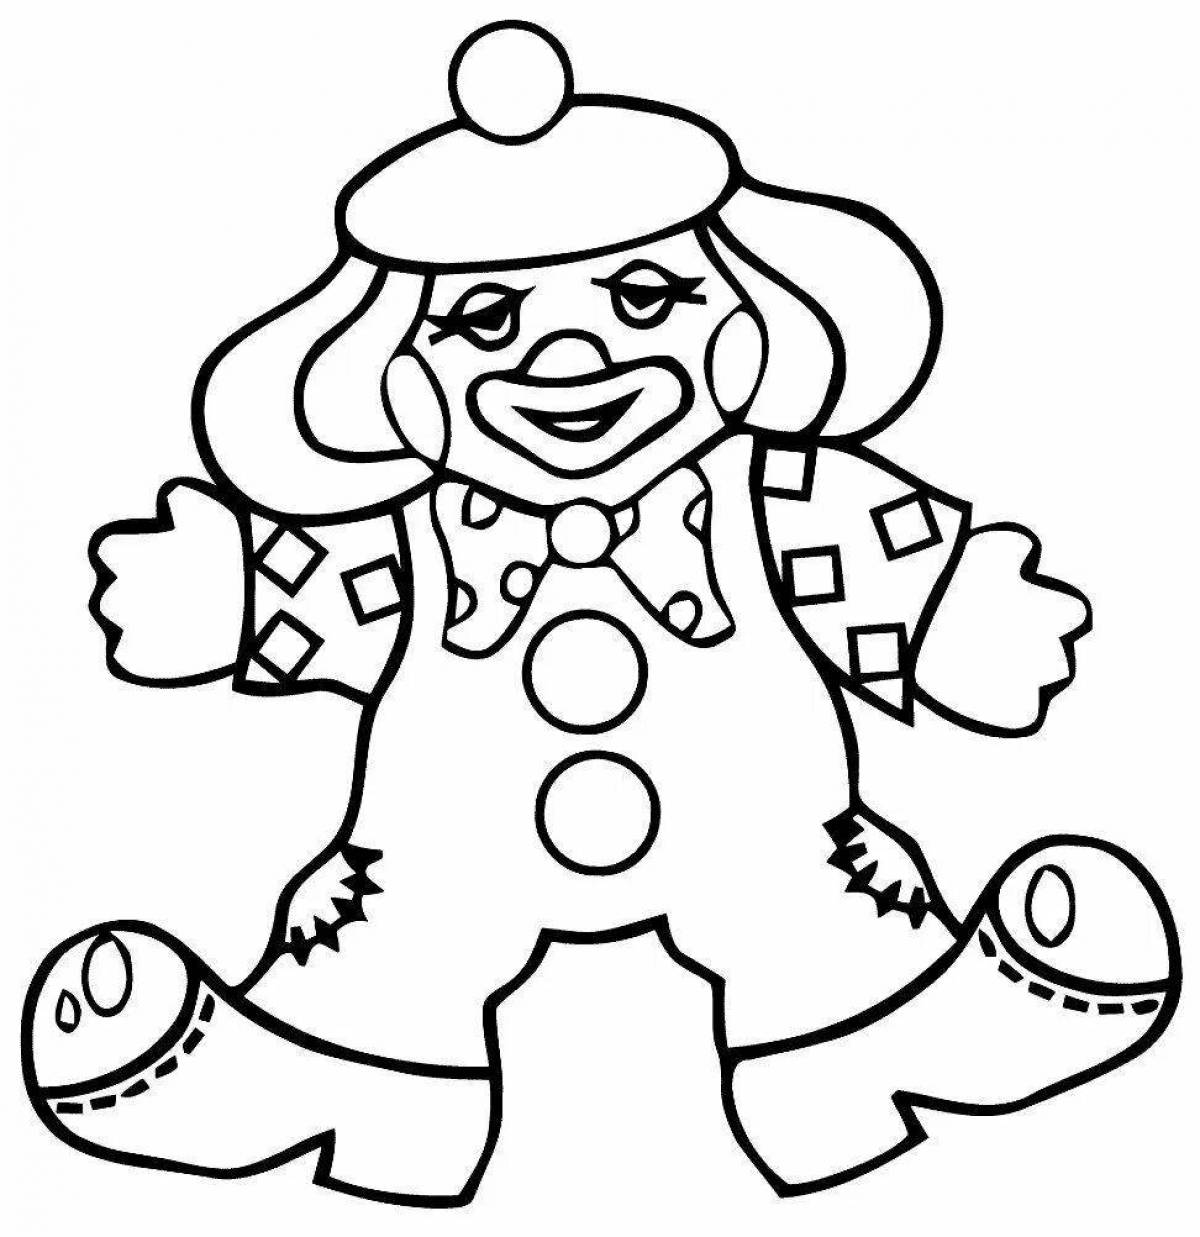 Playful clown figurine